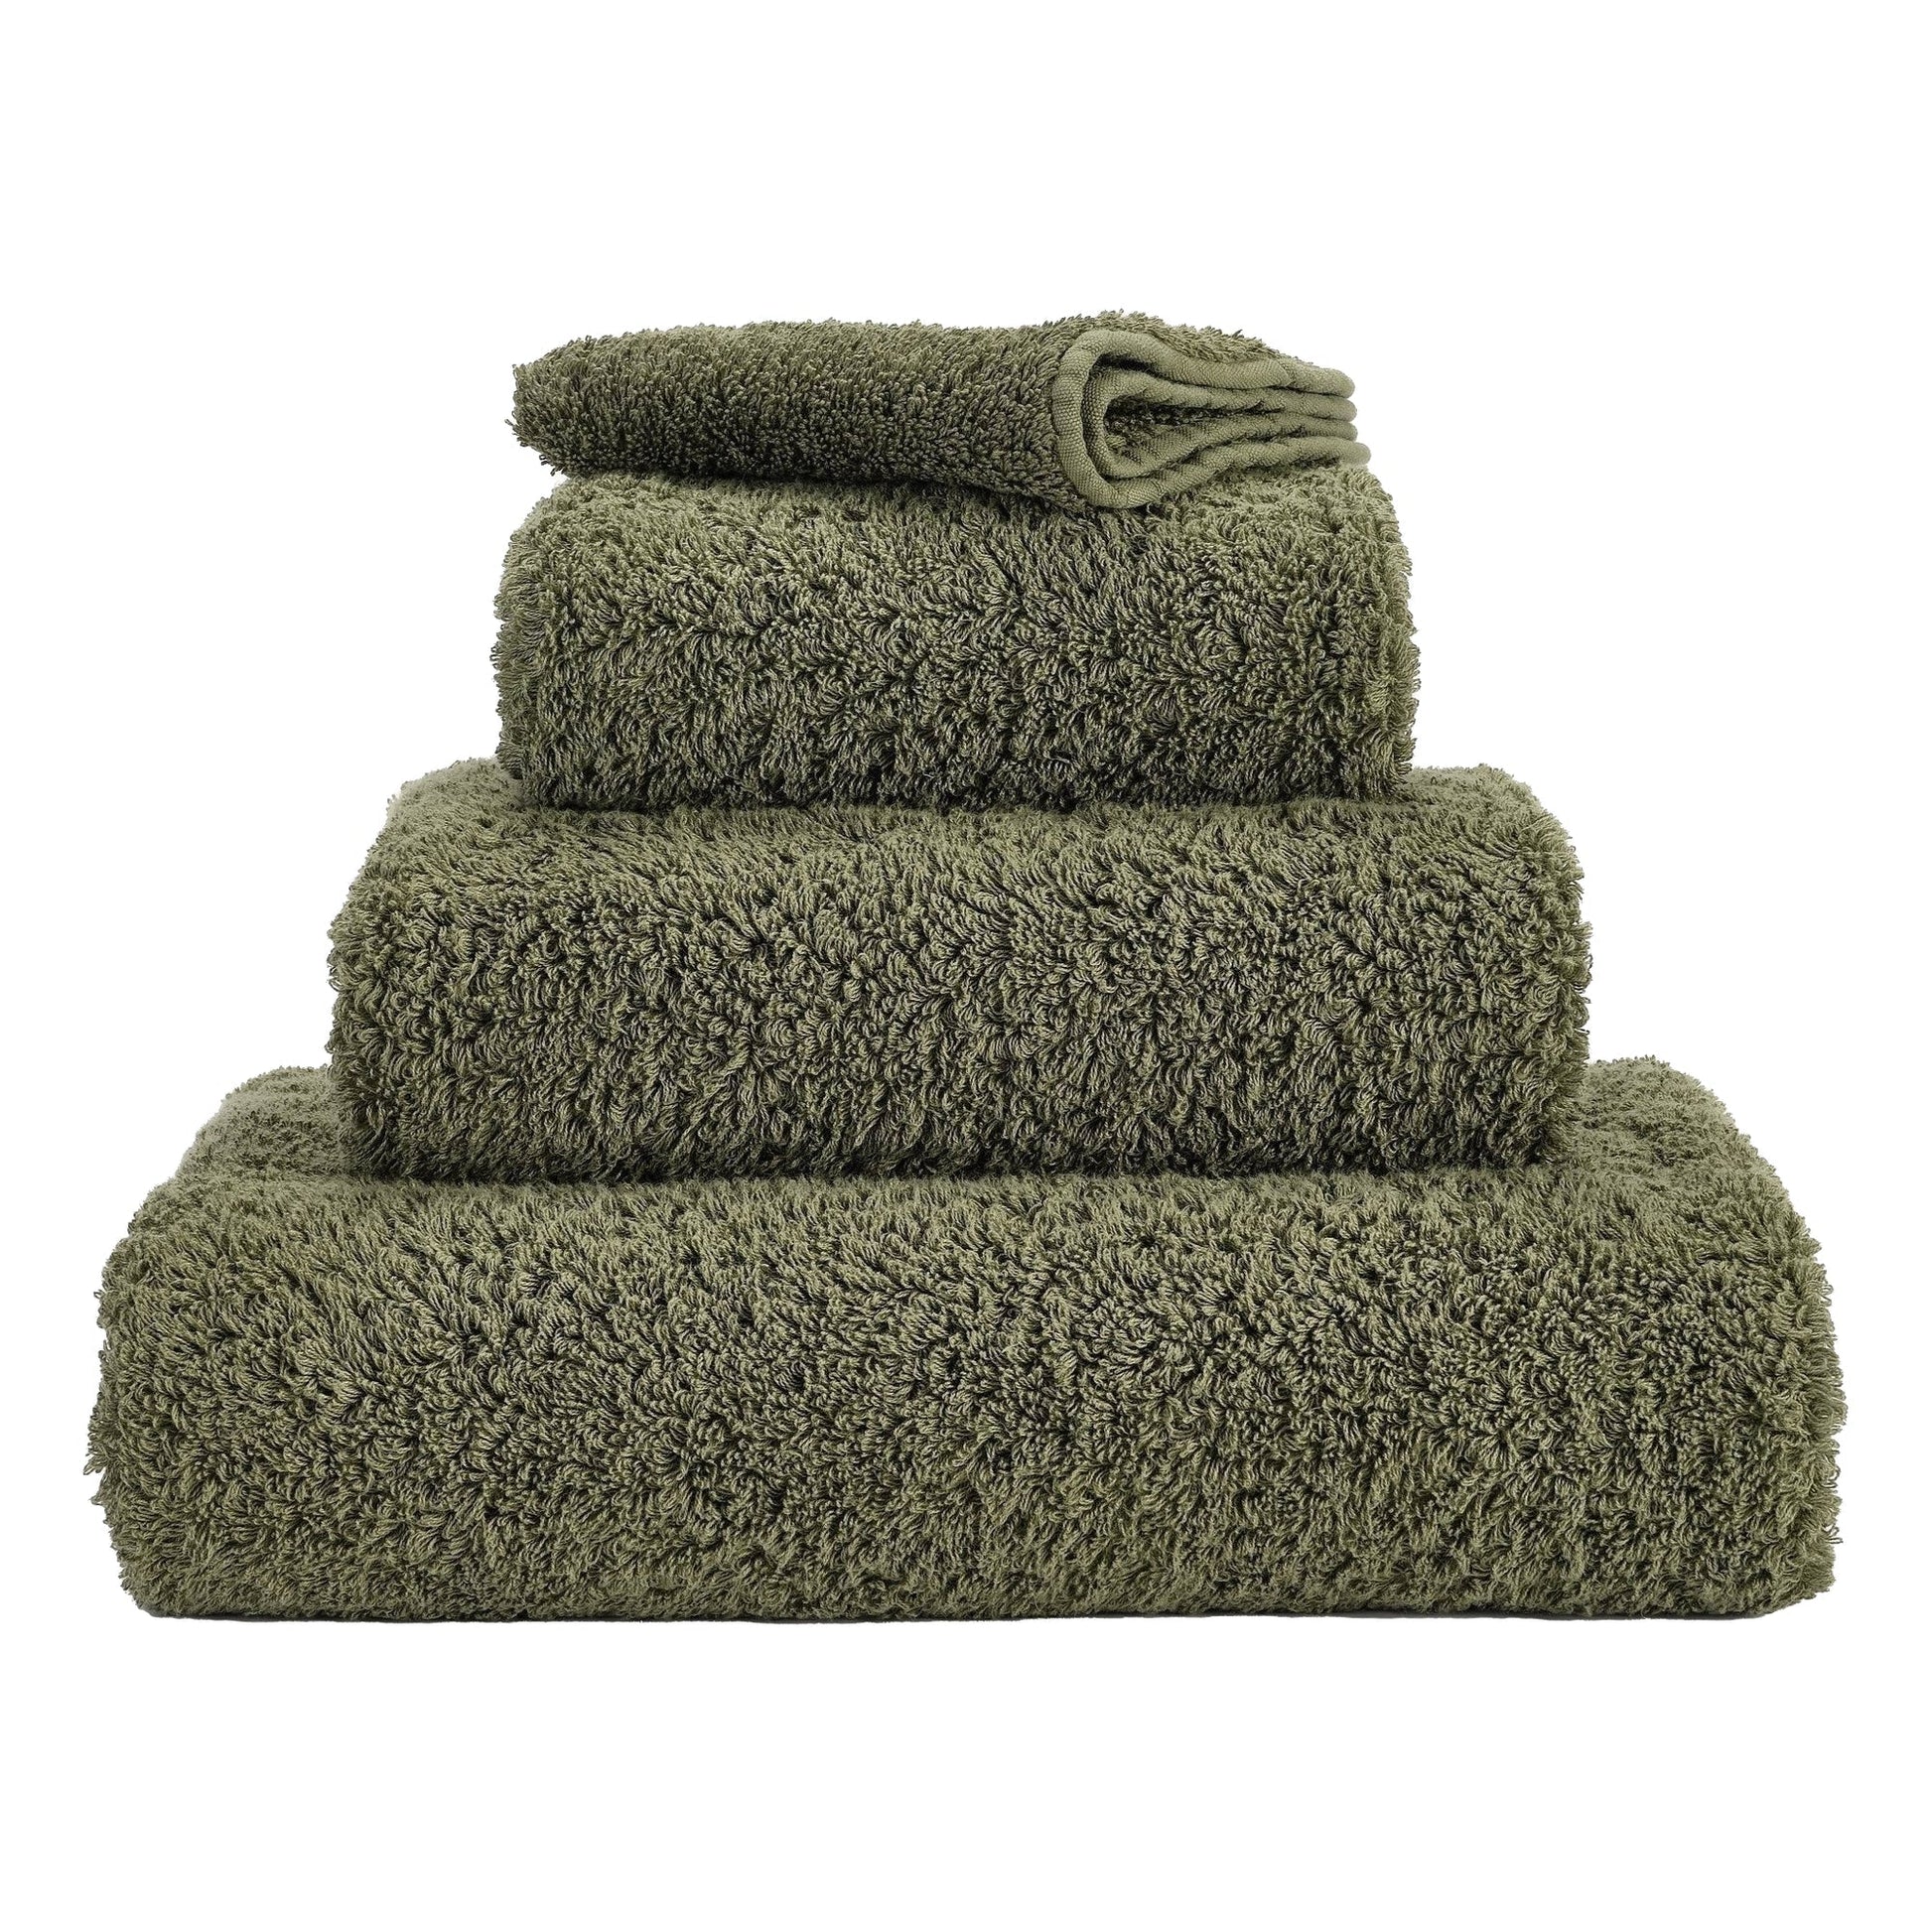 Luxury Super Pile Egyptian Cotton Towel by Abyss & Habidecor | 275 Khaki - |VESIMI Design| Luxury and Rustic bathrooms online